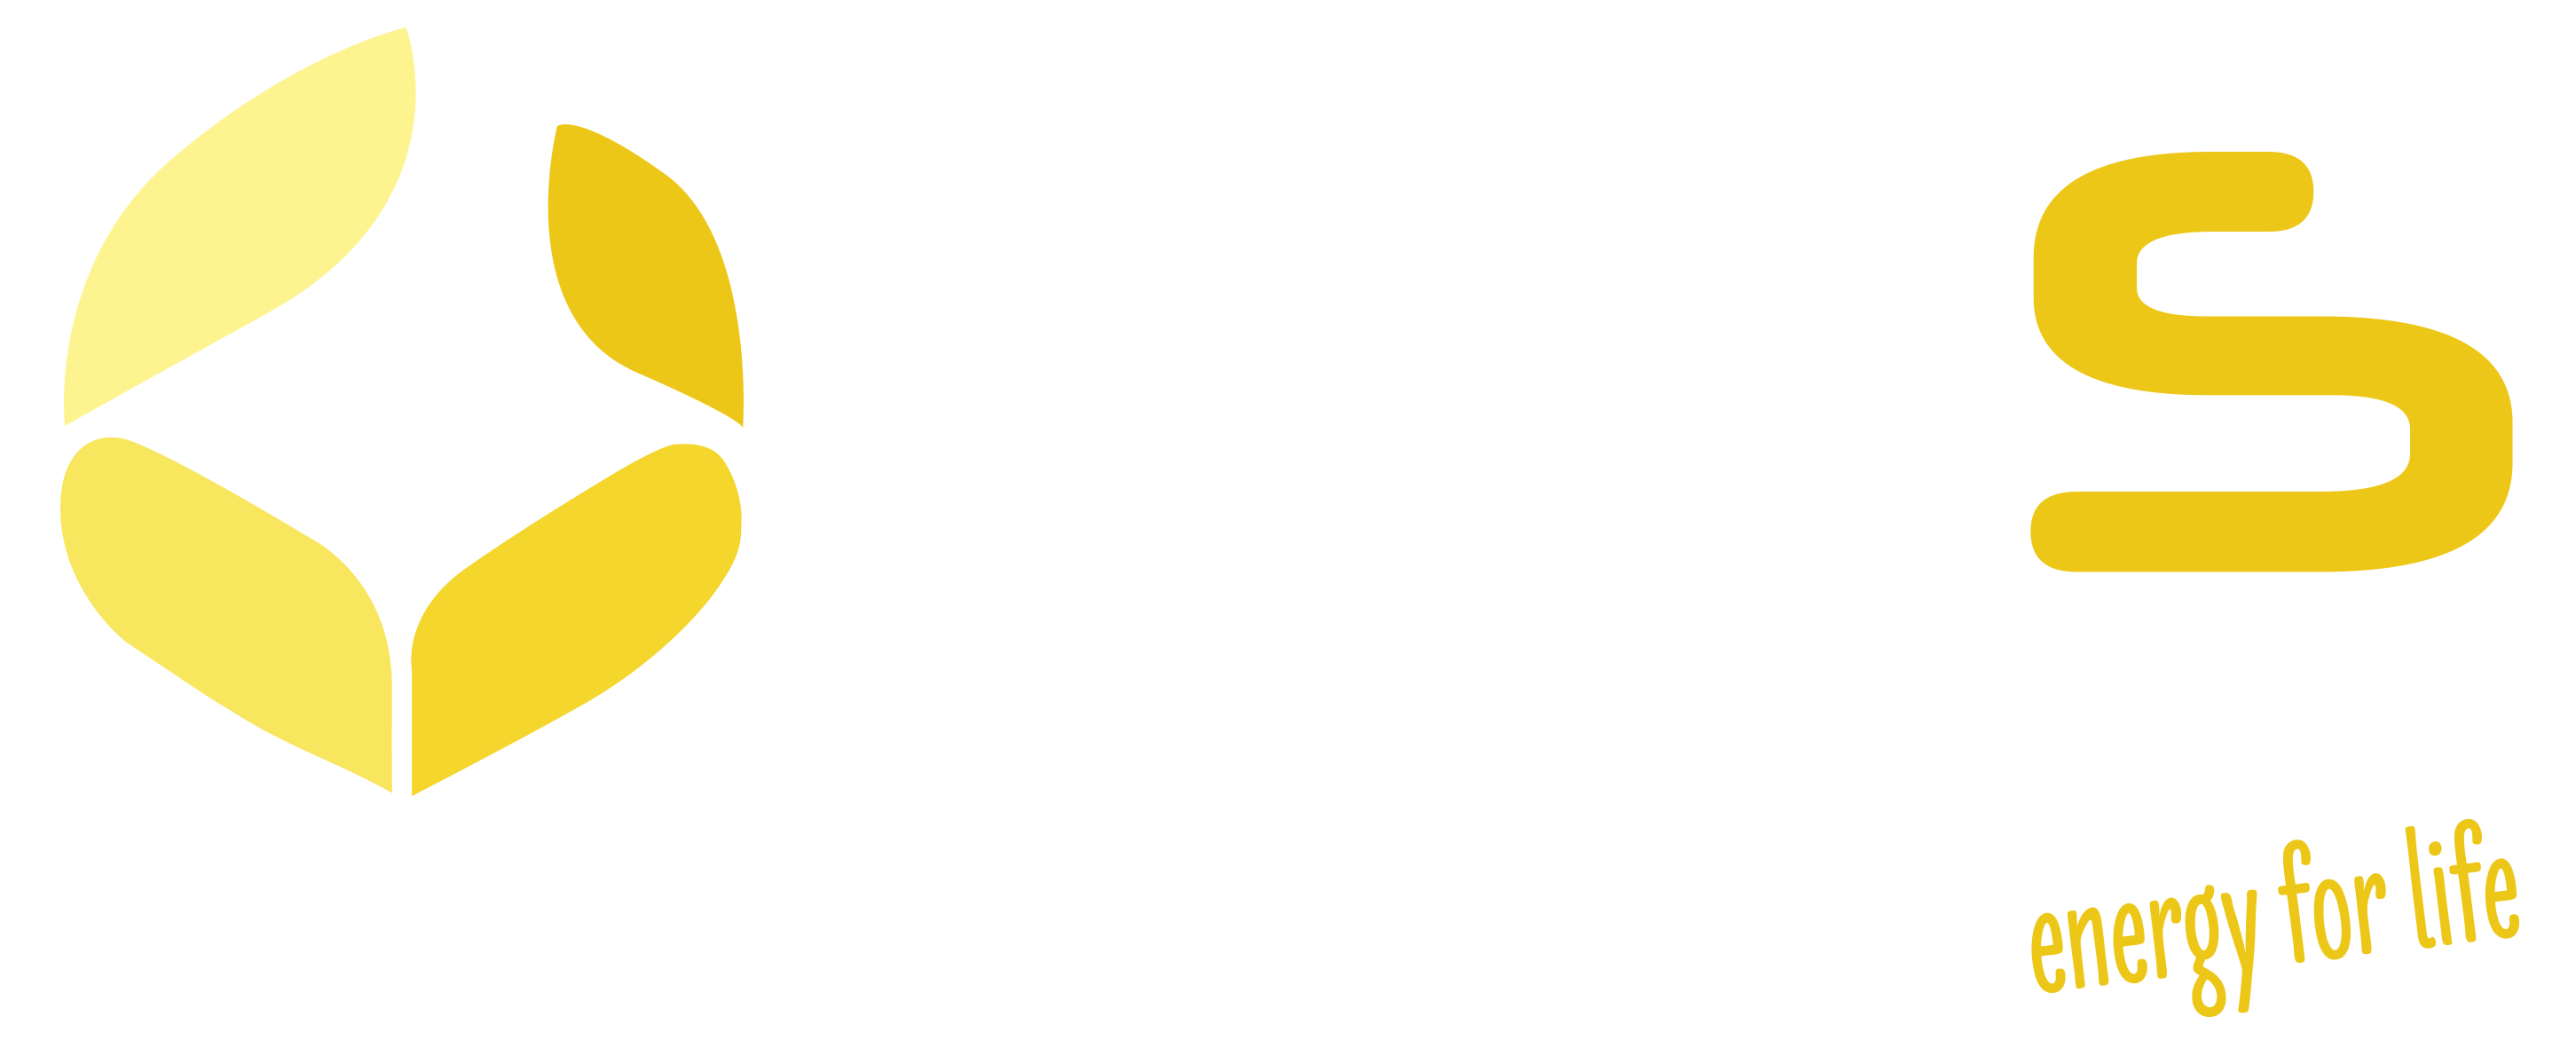 geb-udeinstallation-lps-elektrotechnik